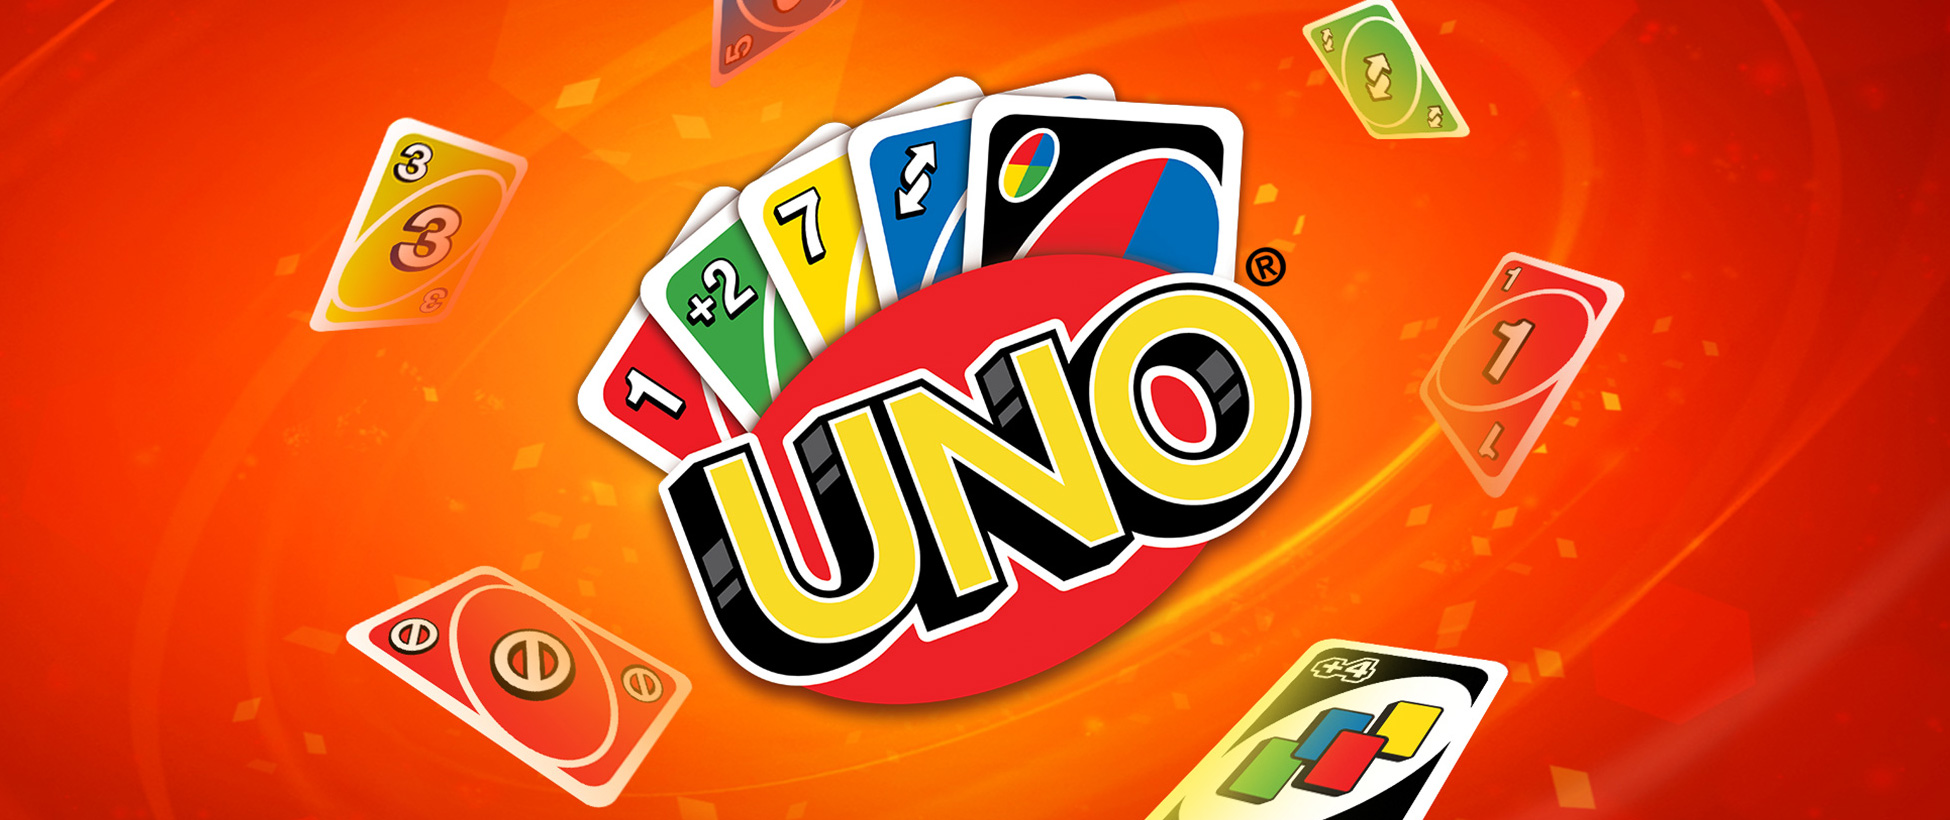 Le célèbre jeu de cartes UNO! va s'associer avec Nike dans le